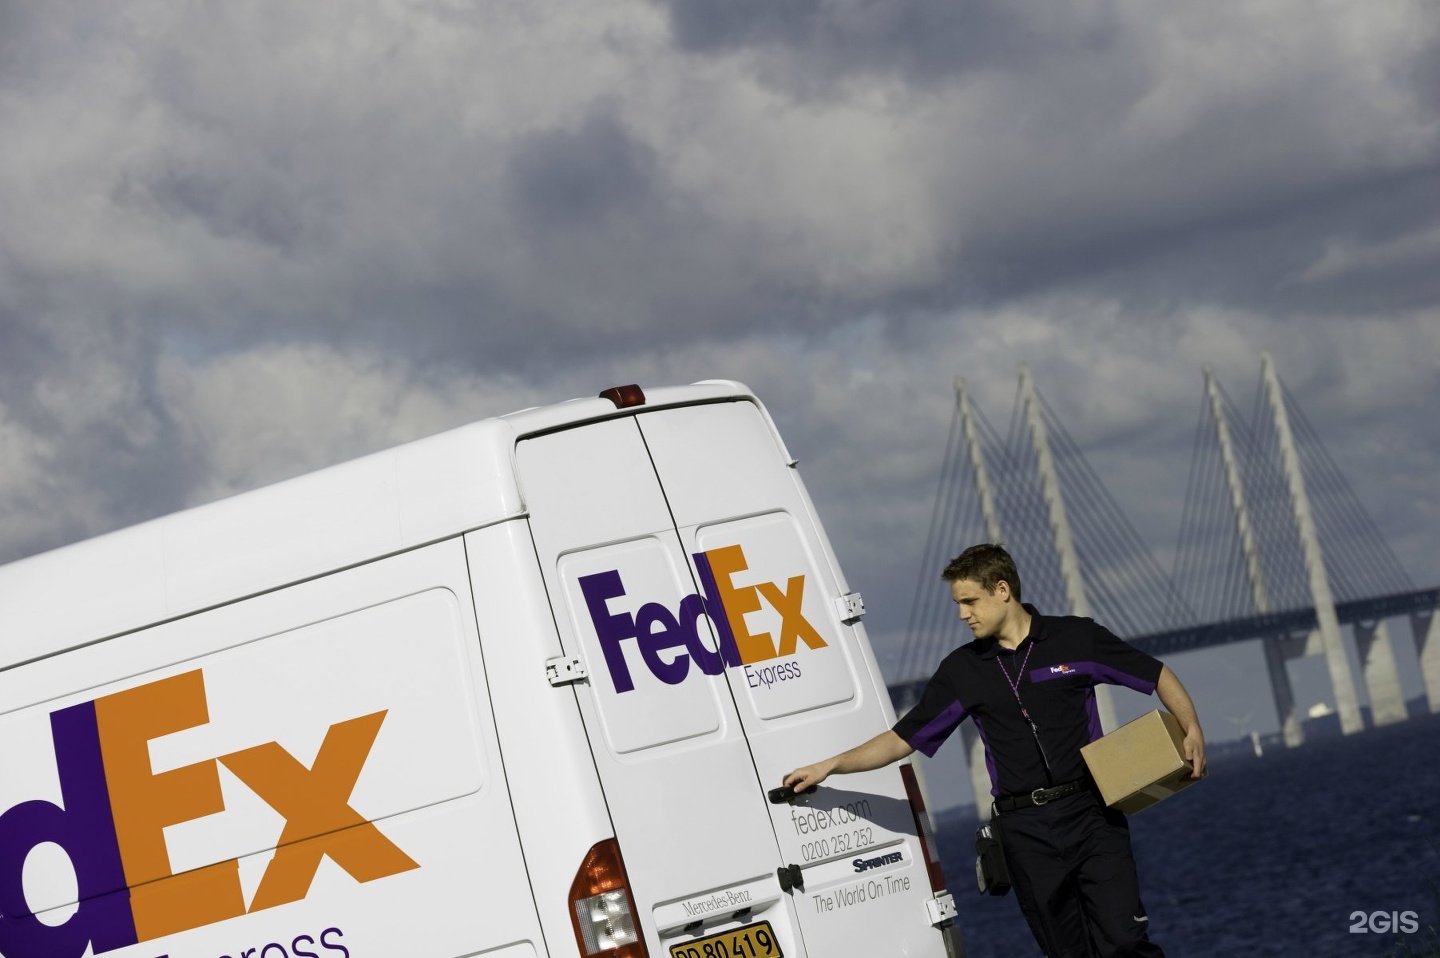 Топ доставок спб. FEDEX. FEDEX Express. FEDEX логотип. Fed exтранспортная компания.